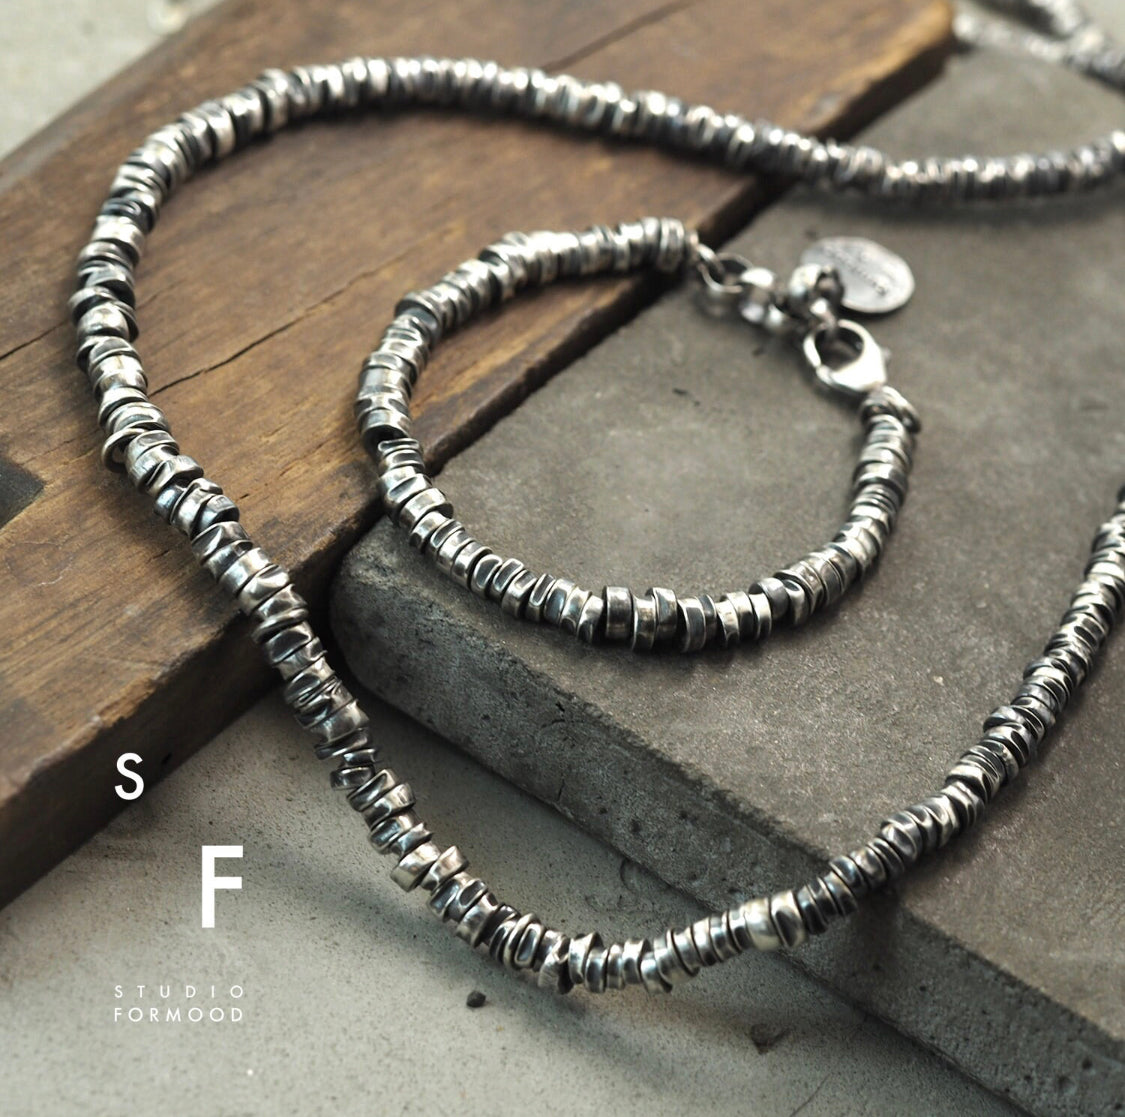 Modern Sterling Silver Bracelet & Choker Necklace Bundle FORMOOD